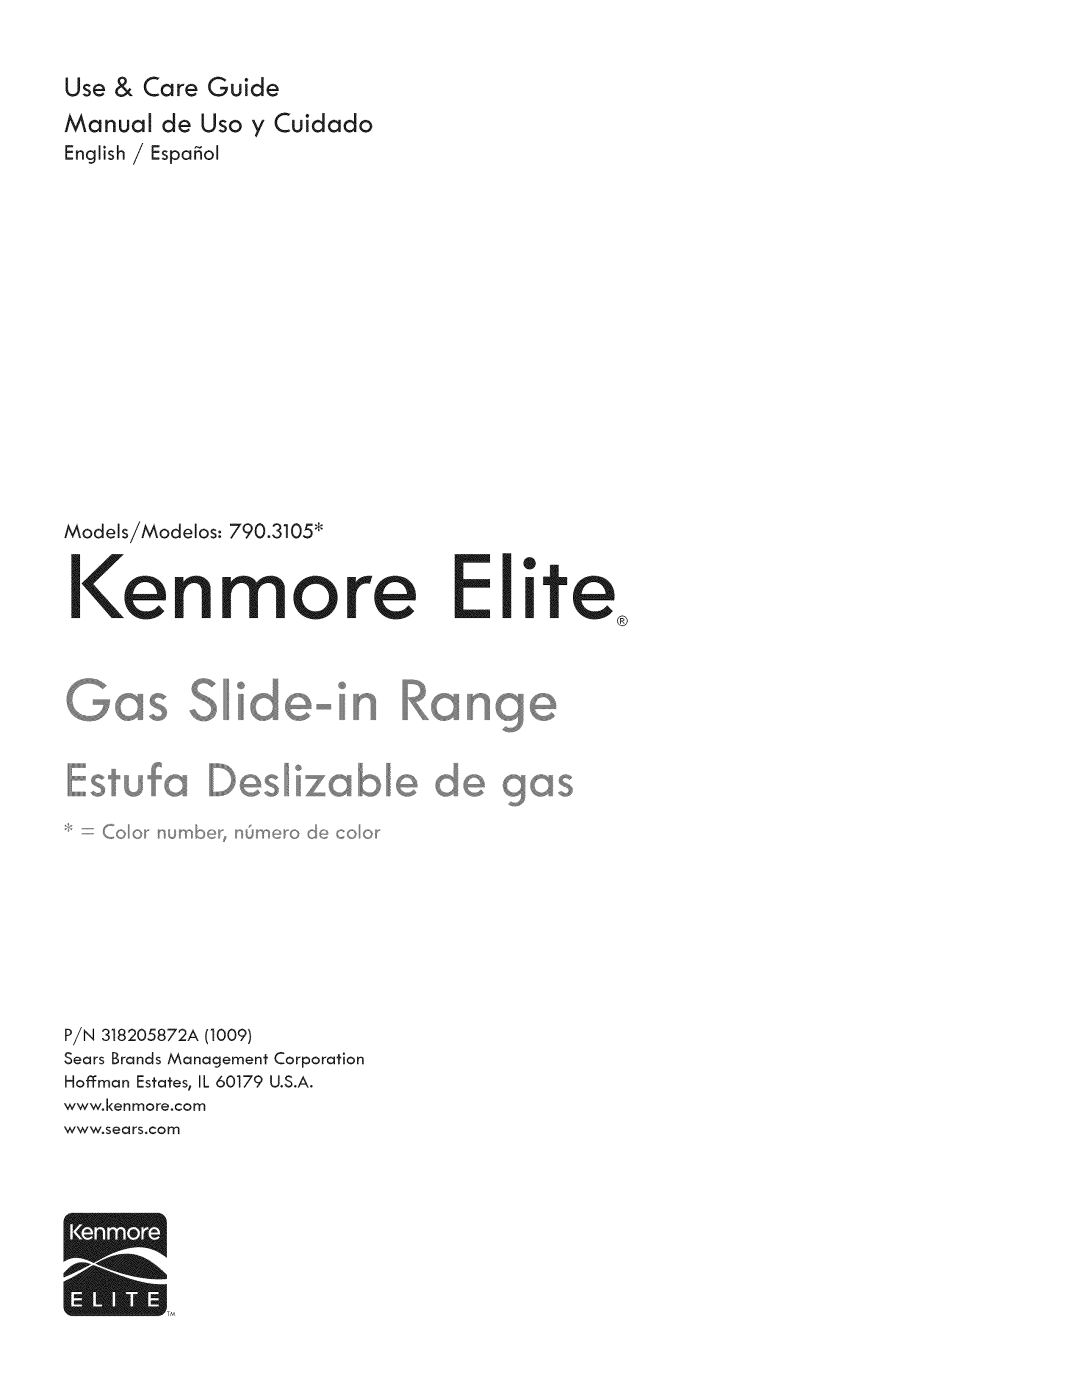 Kenmore 790.3105 manual Use & Care Guide, l<e more lite, Gs S i o n ng, Deslizable de 